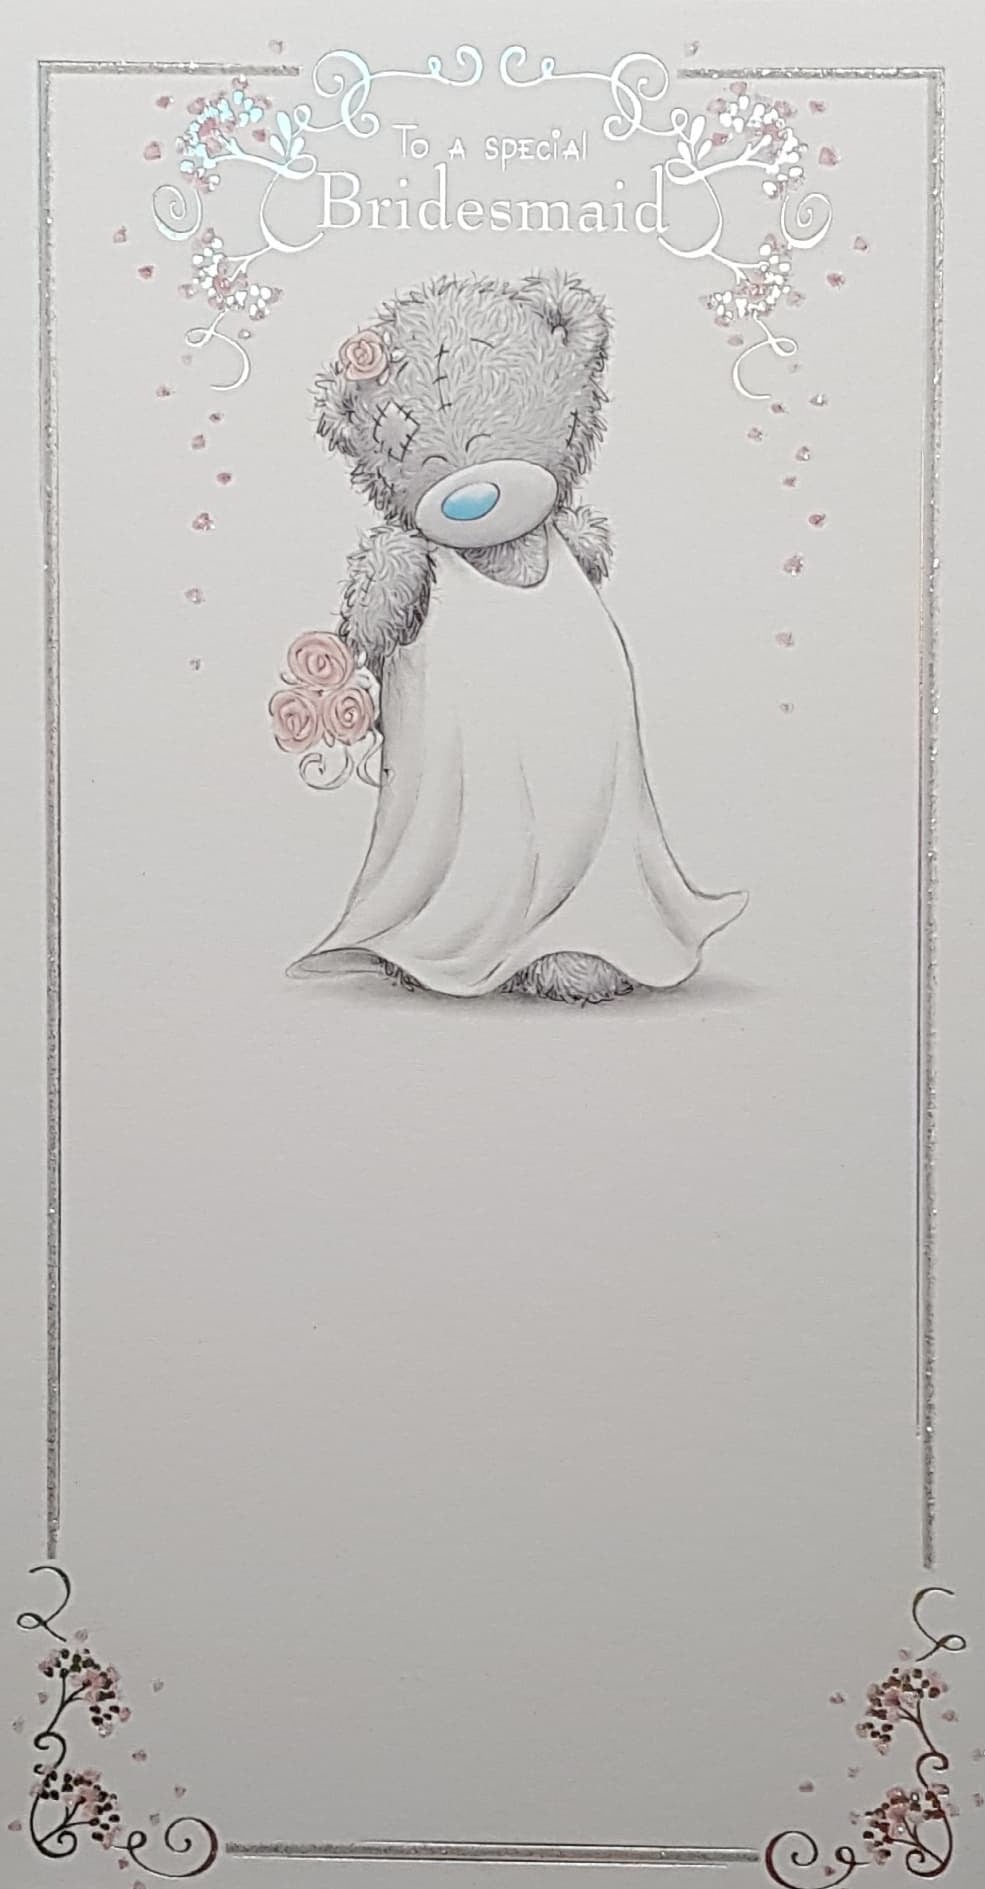 Wedding Card - Special Bridesmaid / Cute Bridesmaid Teddy In A Dress